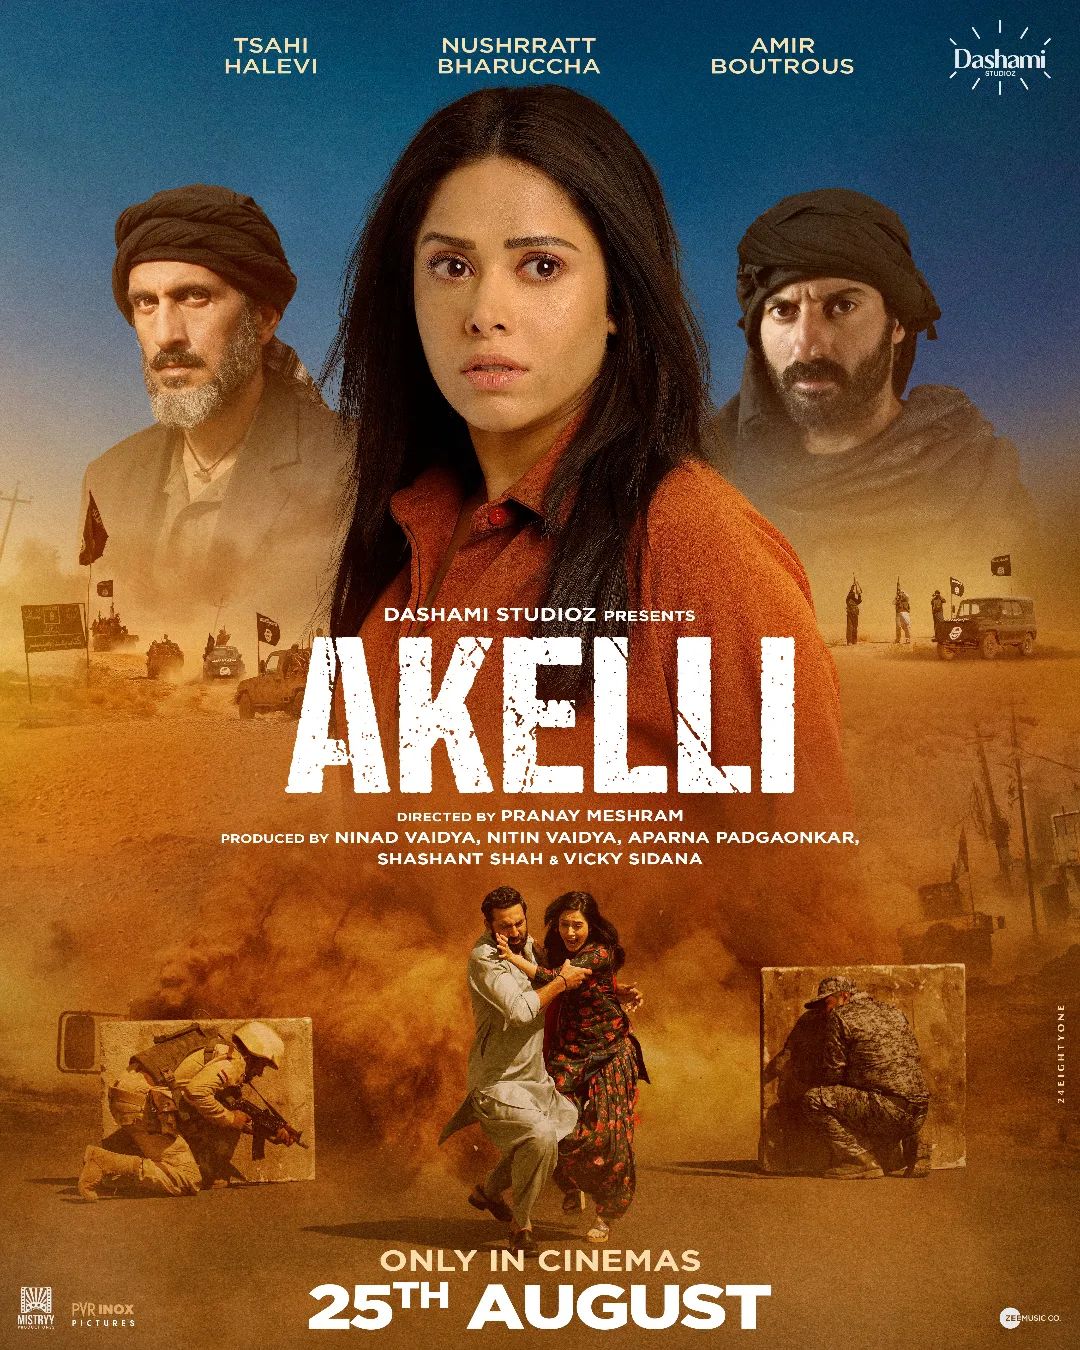 Akelli poster